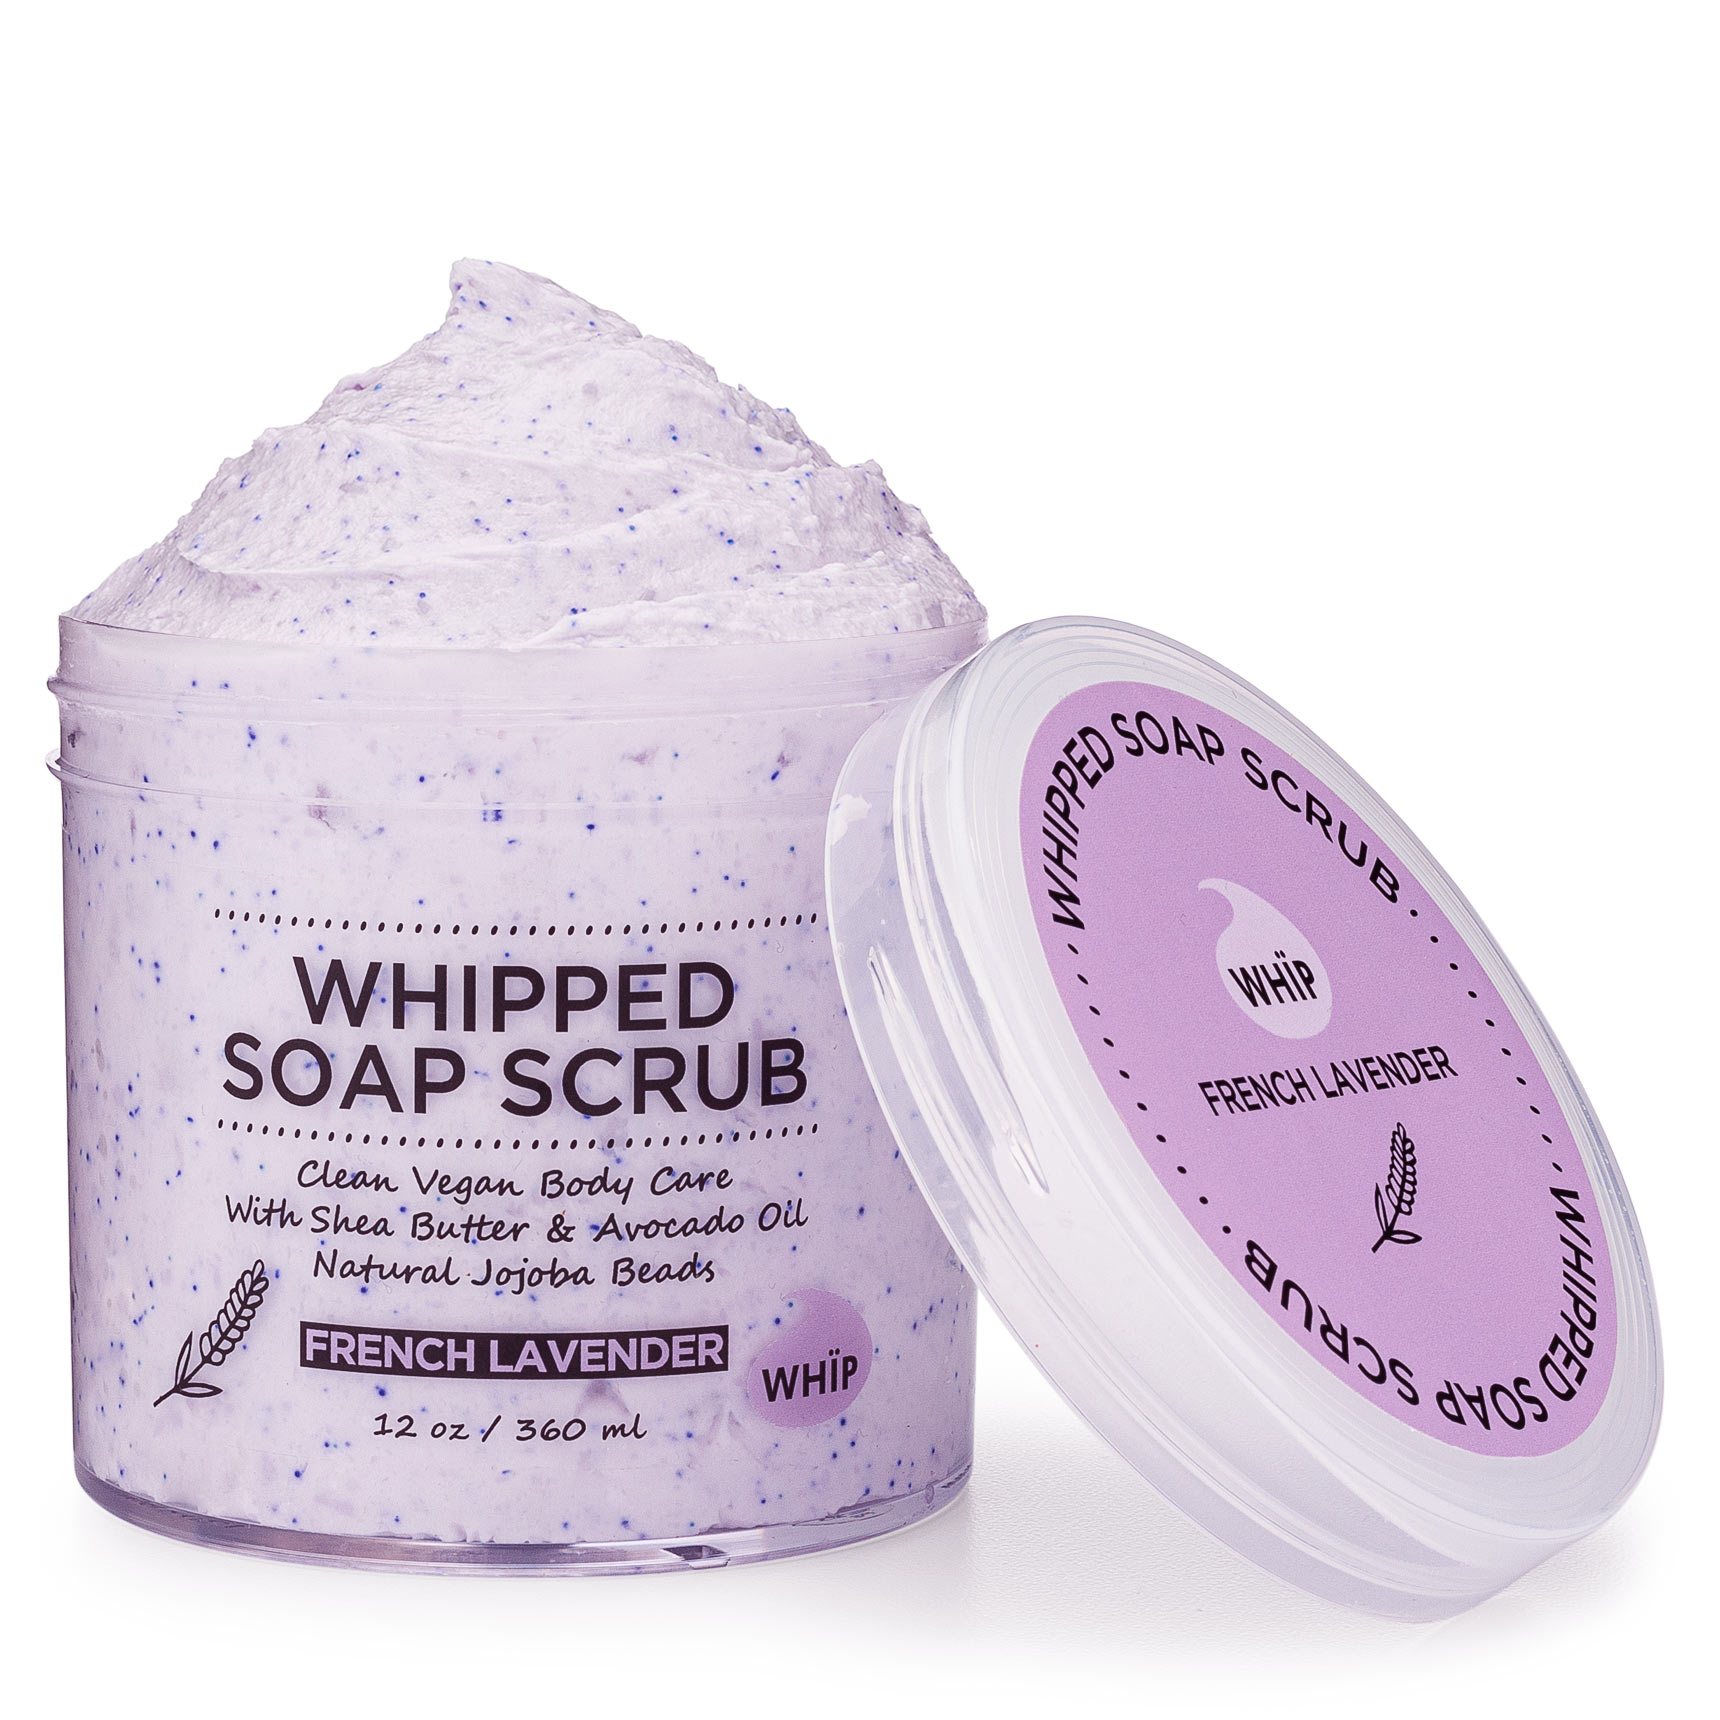 Whipped Soap Scrub - French Lavender WHÏP Image